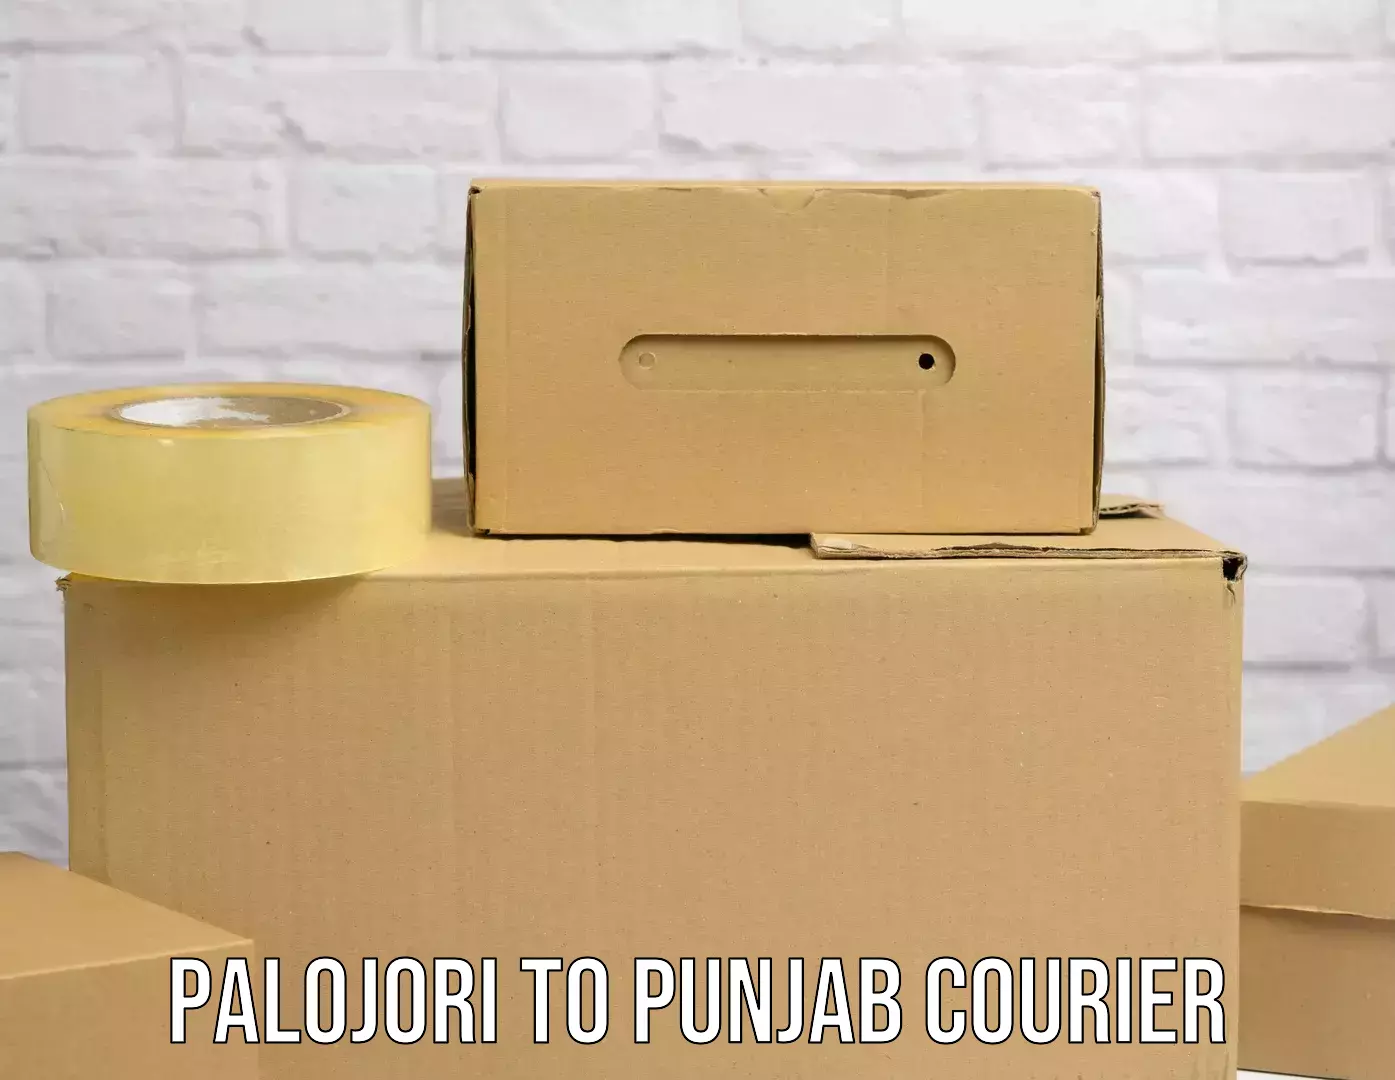 Online shipping calculator Palojori to Punjab